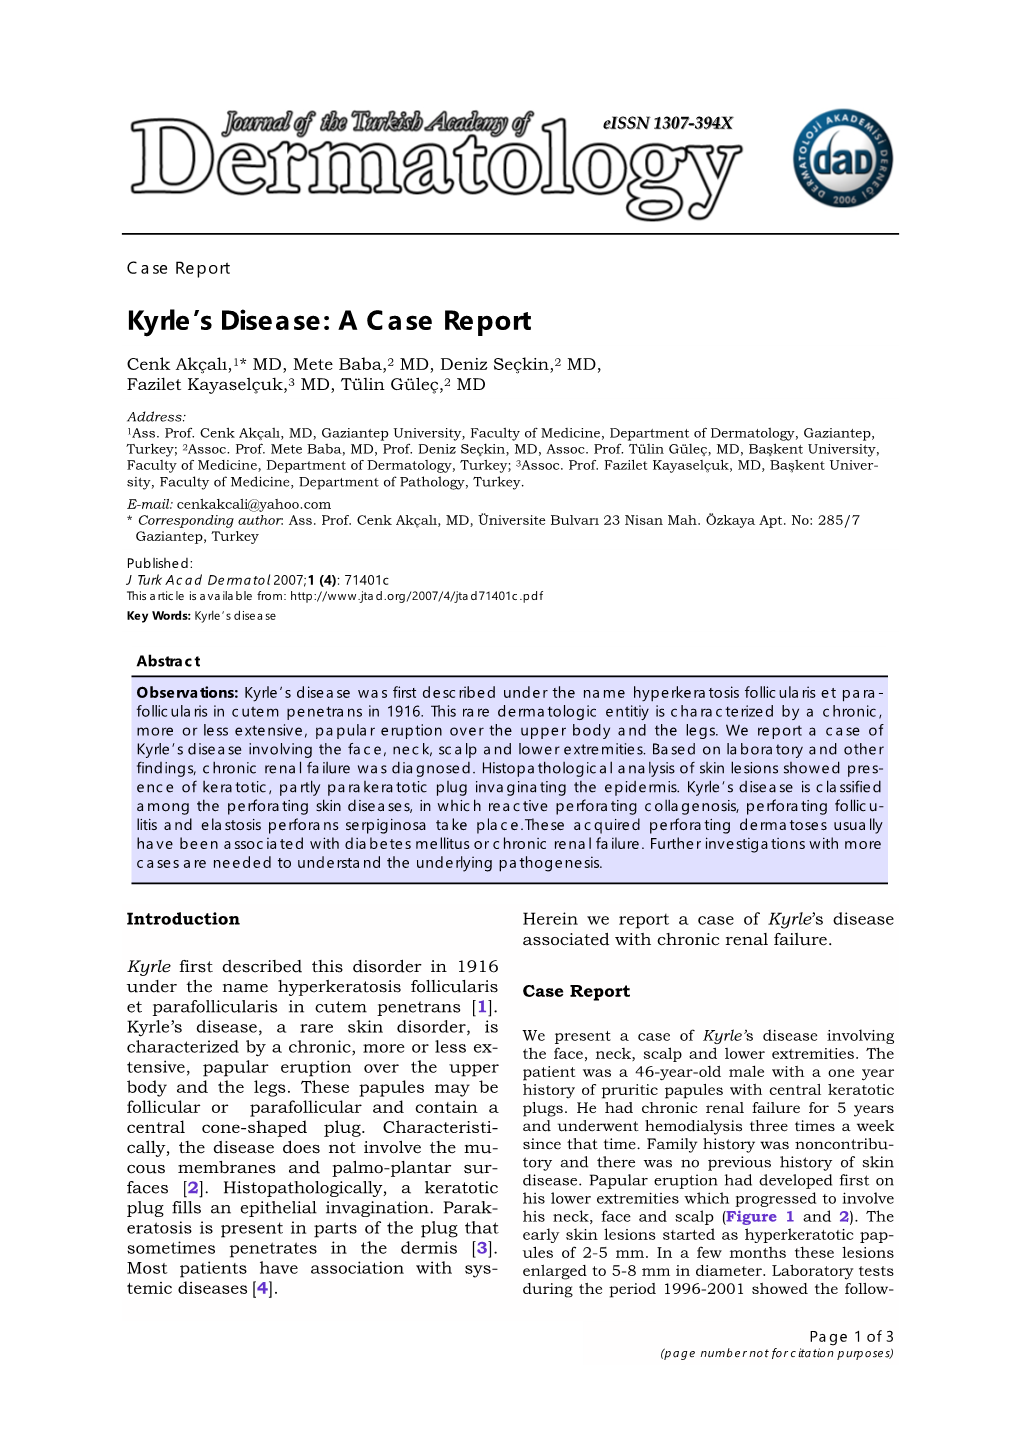 Kyrle's Disease: a Case Report